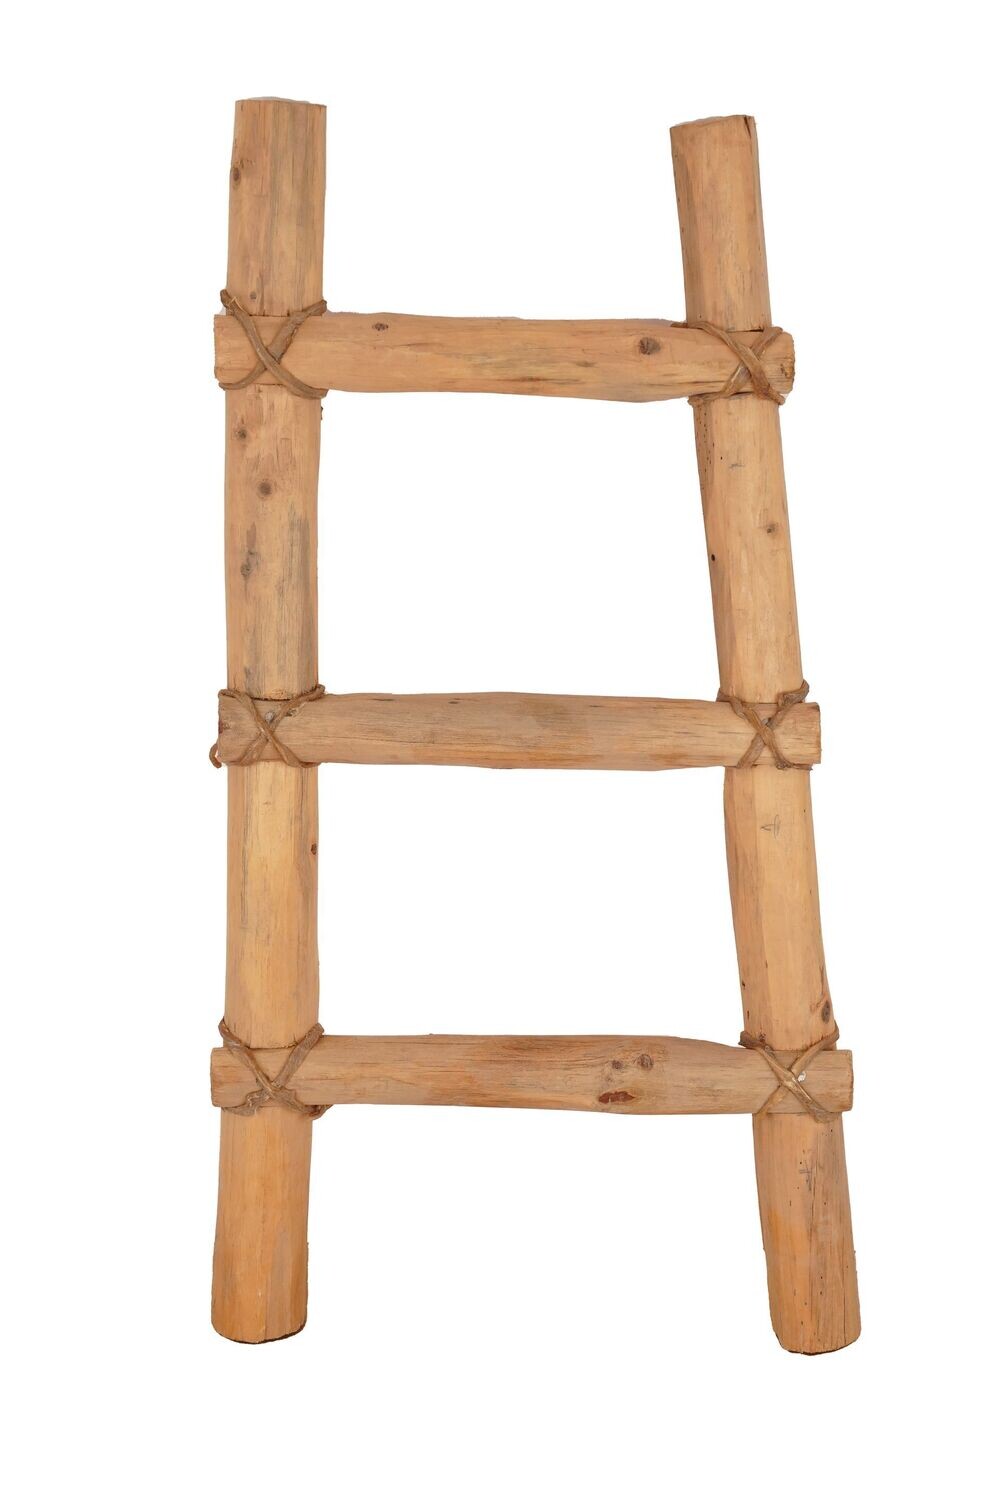 Blanket Wood Kiva Ladder-Farmhouse-Rustic-Handmade-3 Sizes